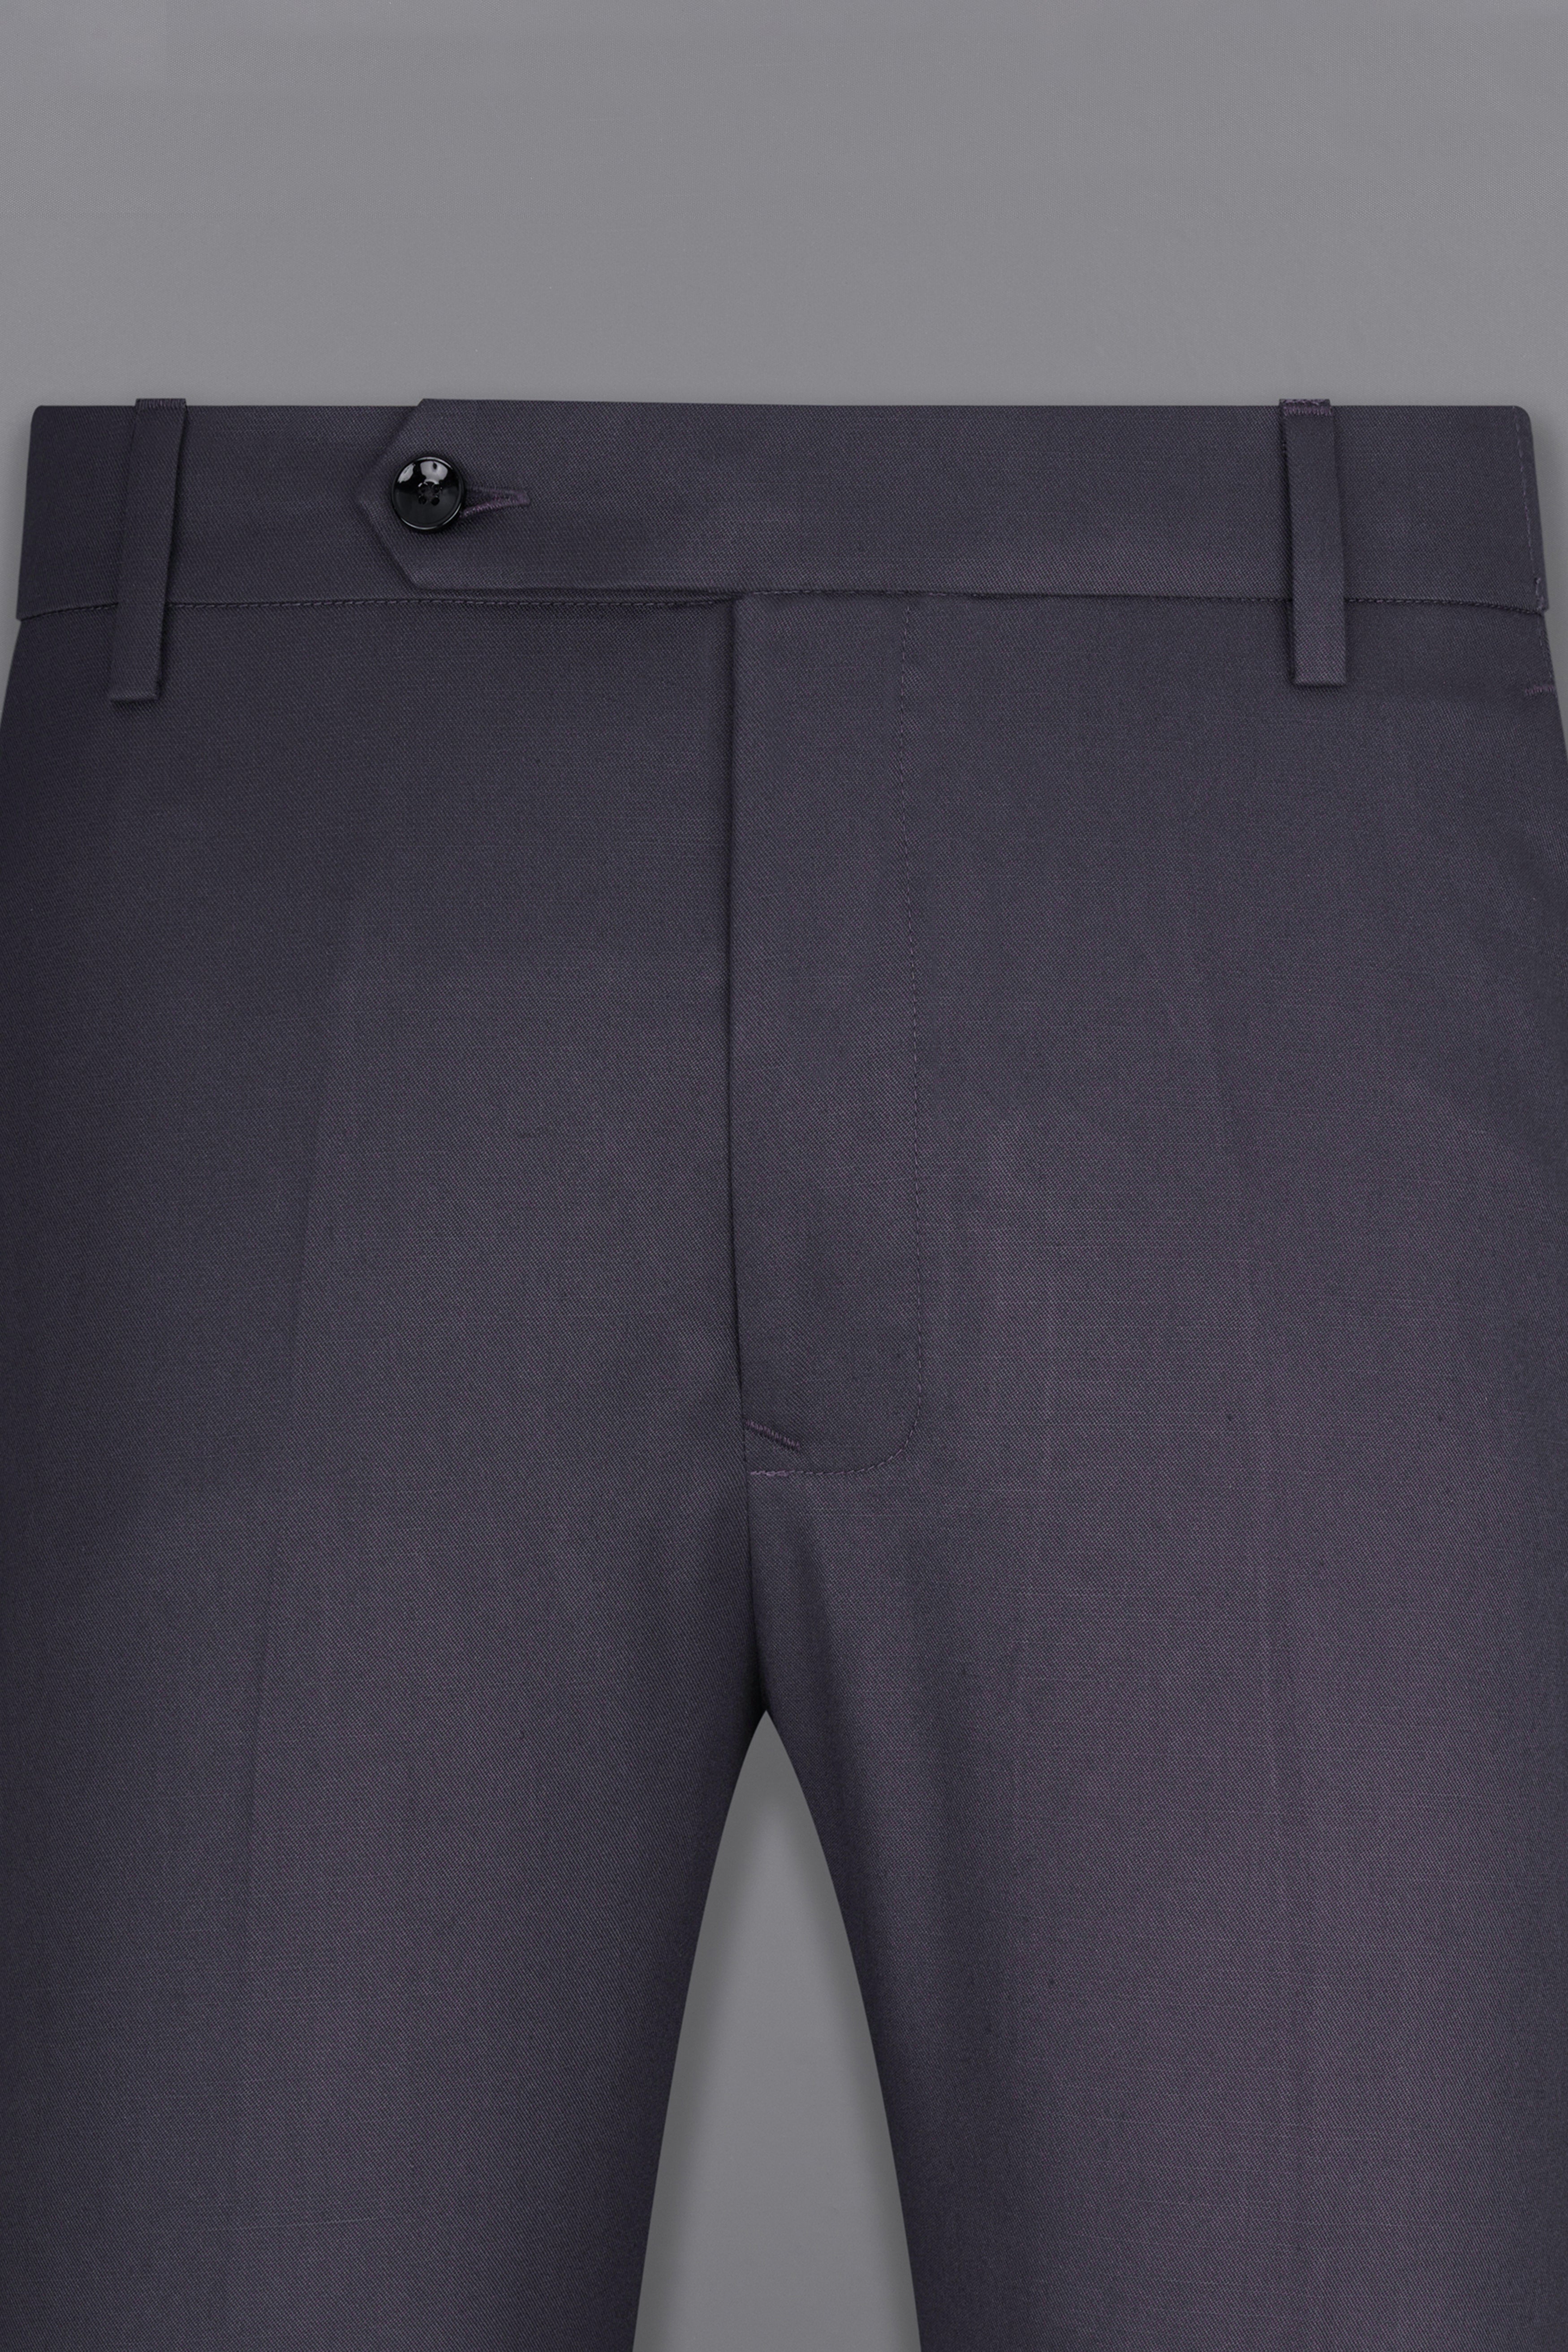 Charcoal Gray Subtle Sheen Stretchable Waistband traveler Pants